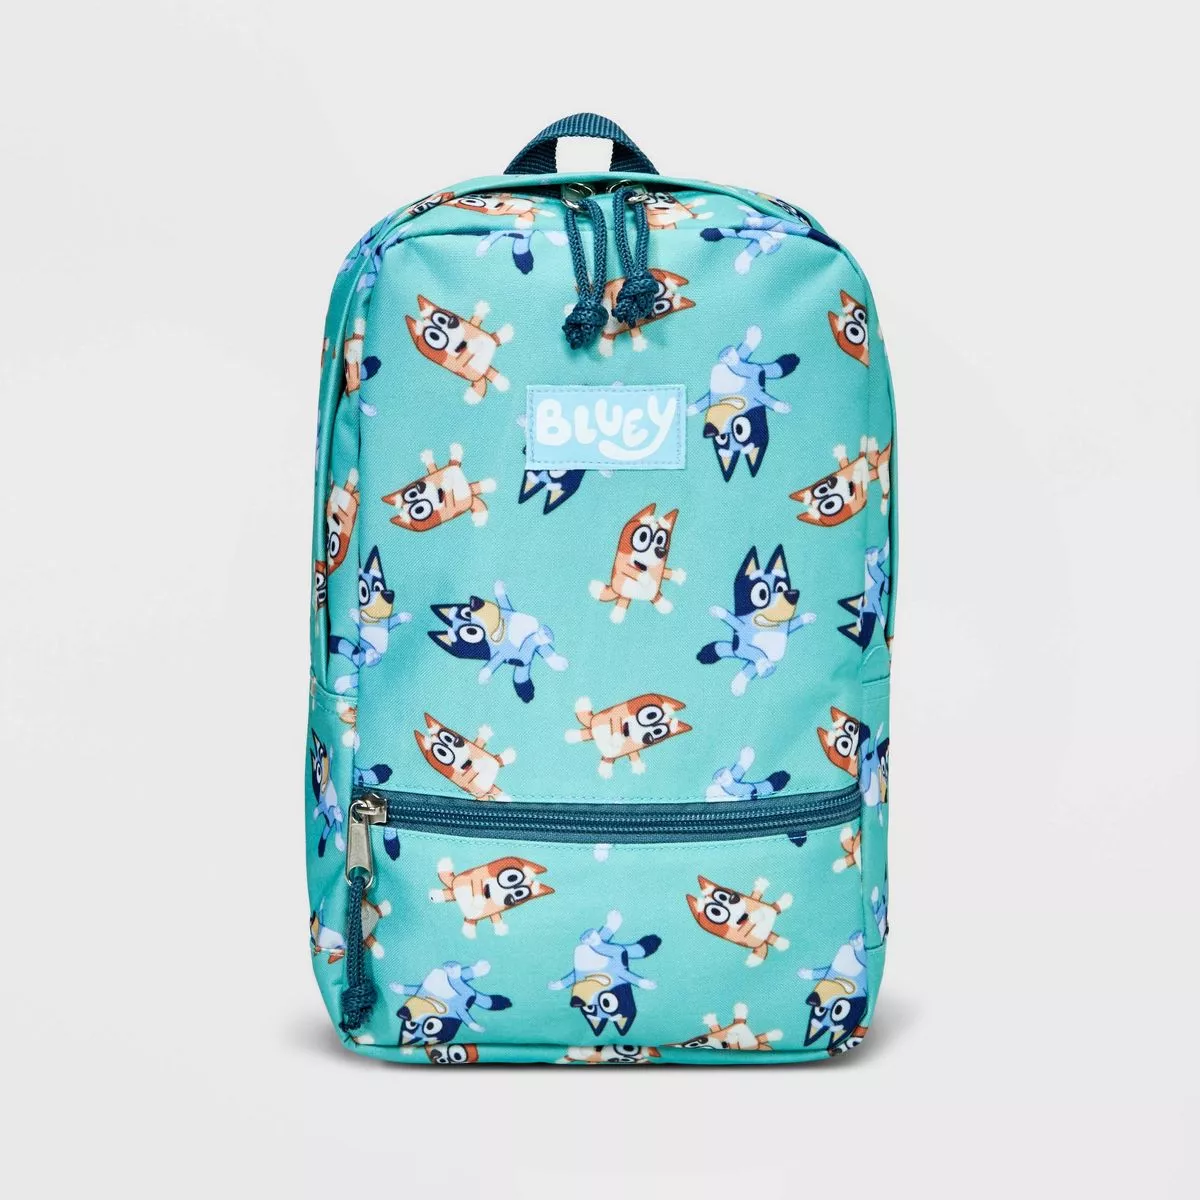 target Bluey toddler backpack so 🥹cute!!#fry #fyp #bluey #blueymerch